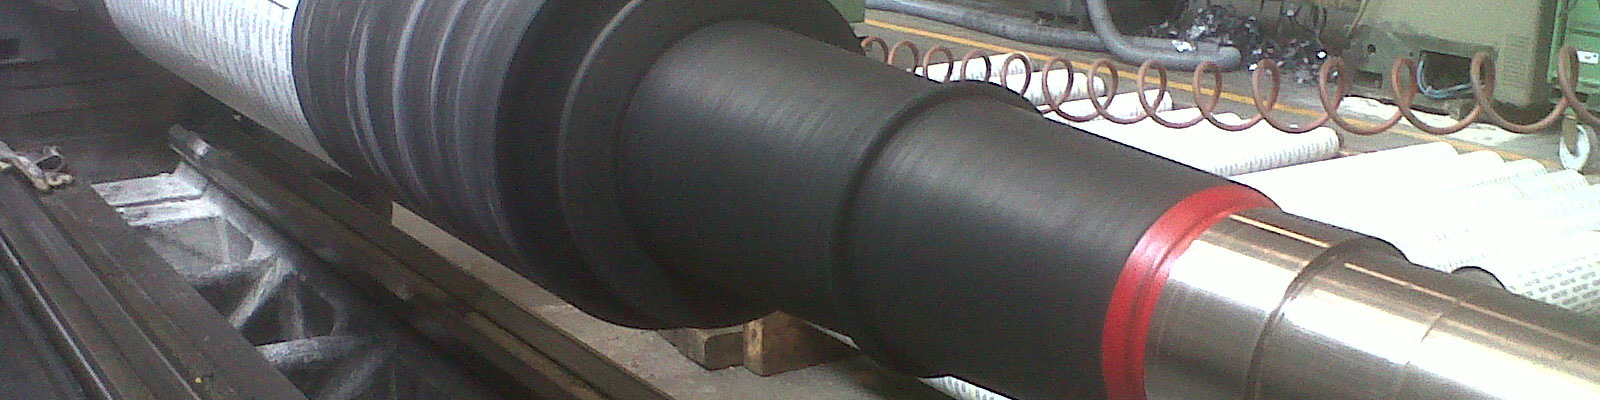 Erregomma - rubber covering